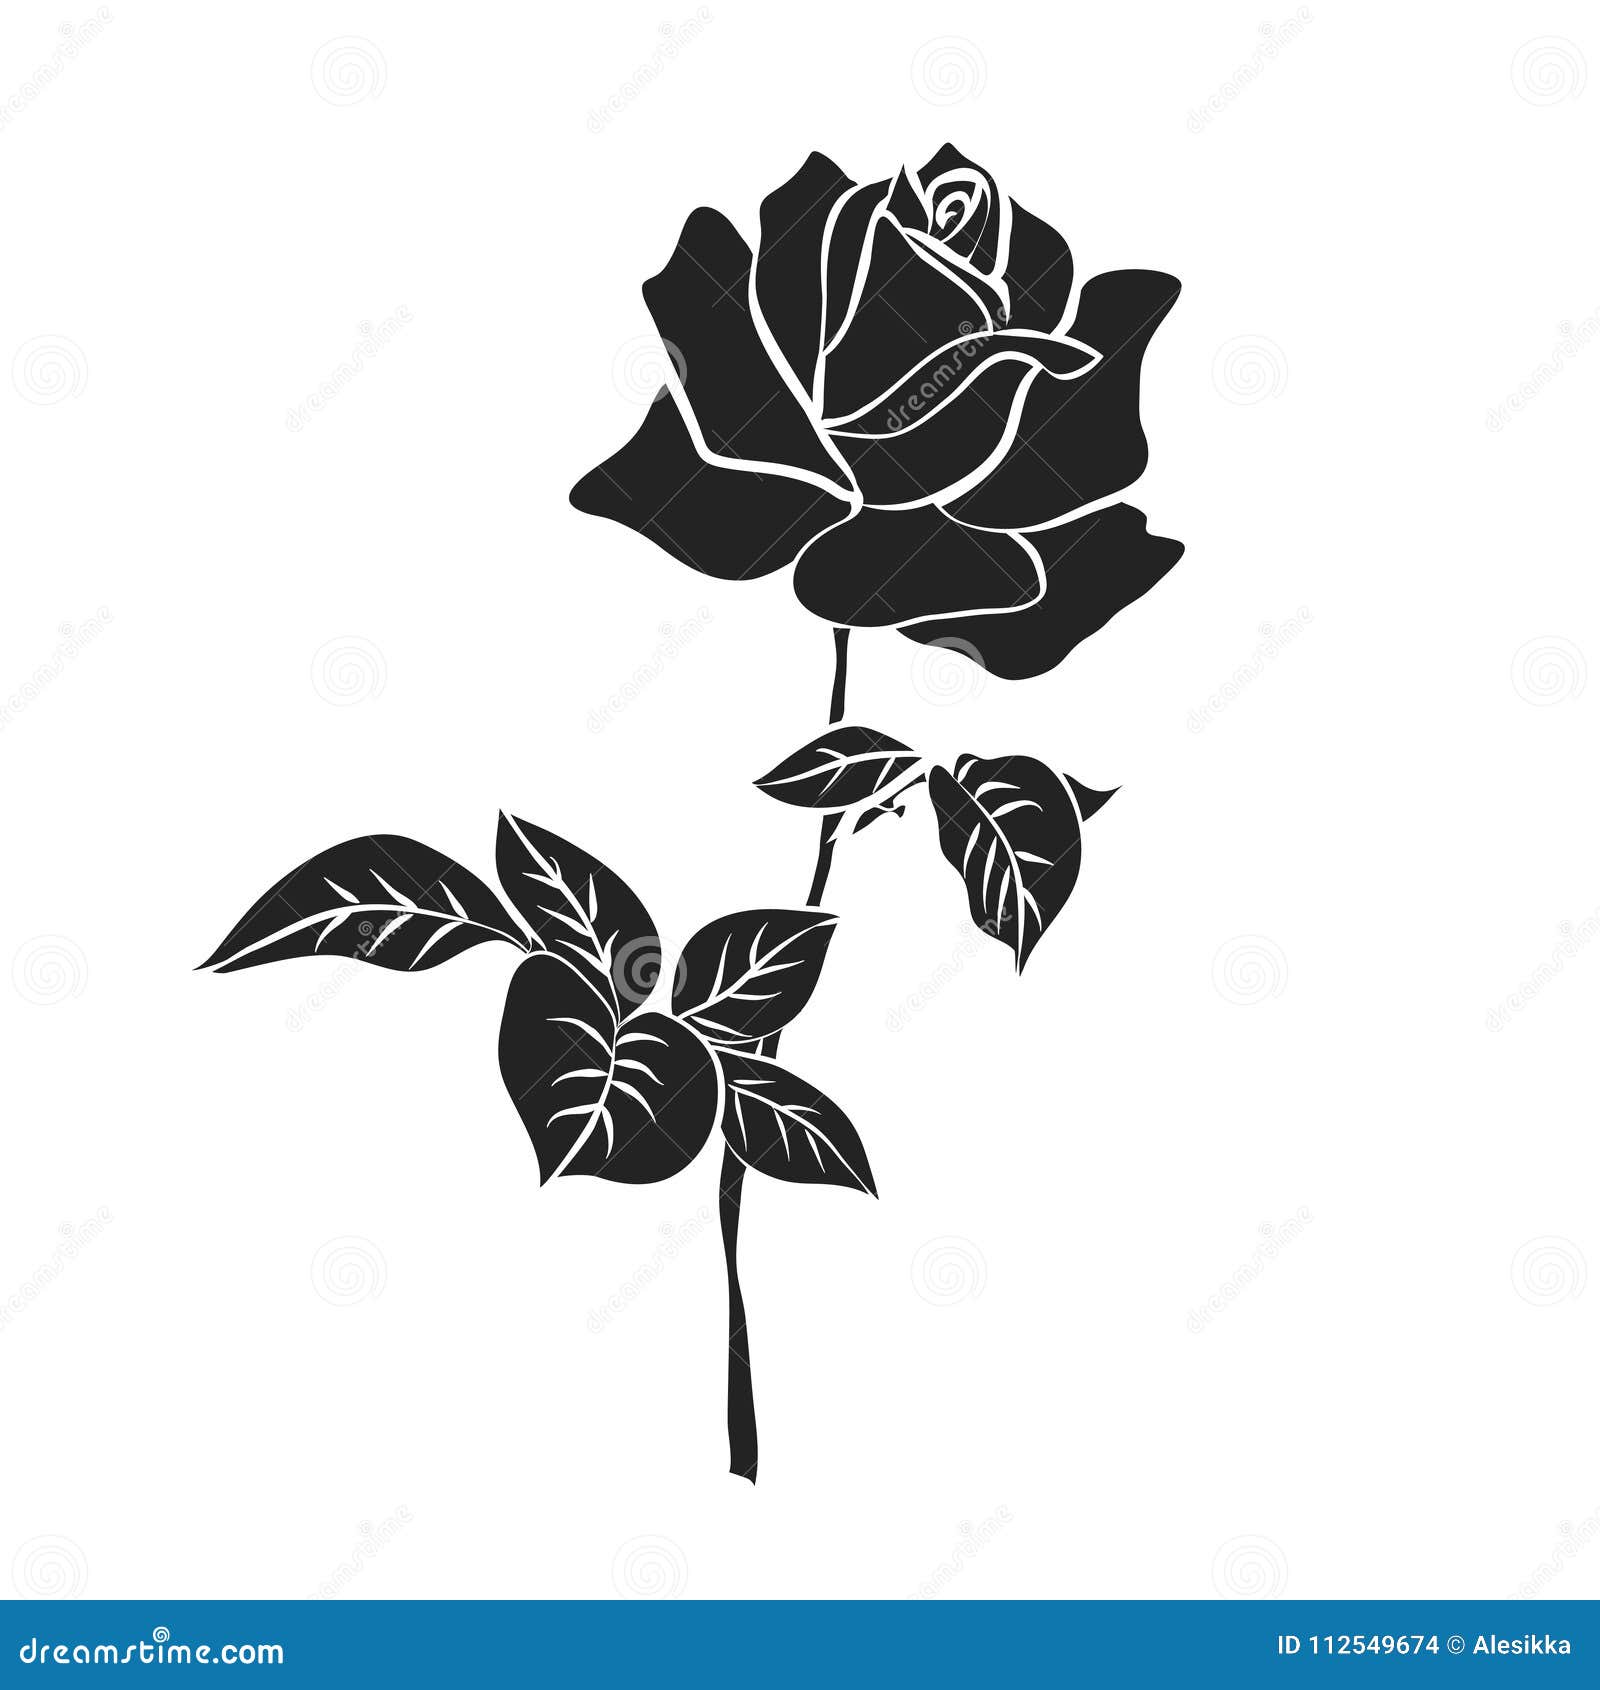 Silhouette of rose stock vector. Illustration of blossom - 112549674